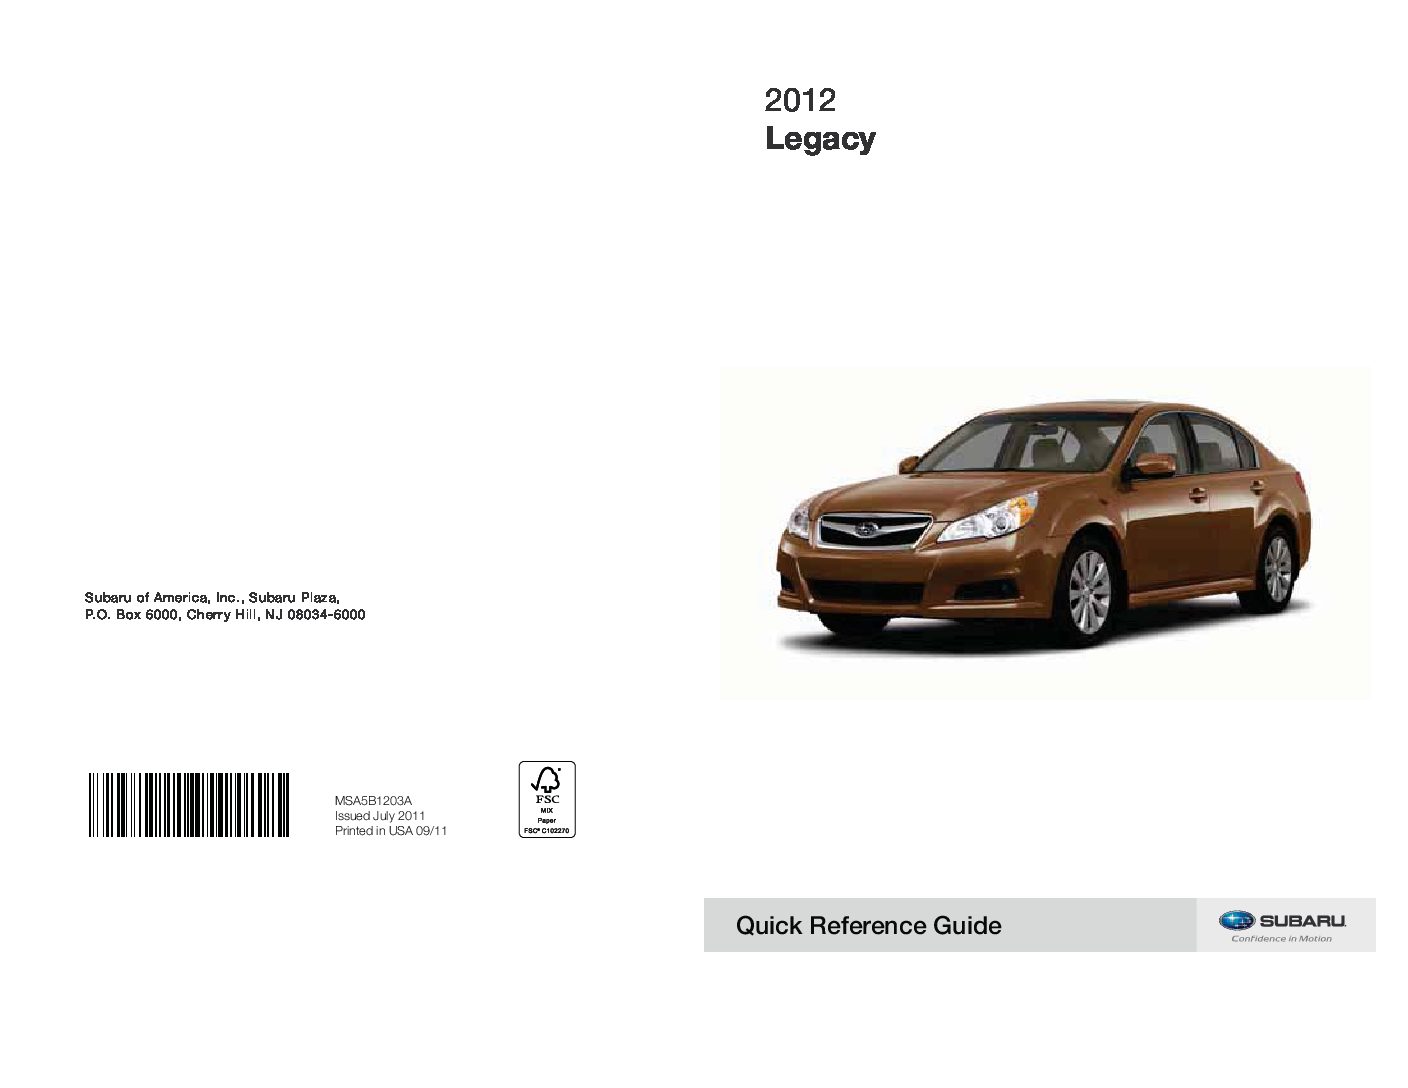 2012 Subaru Legacy Image